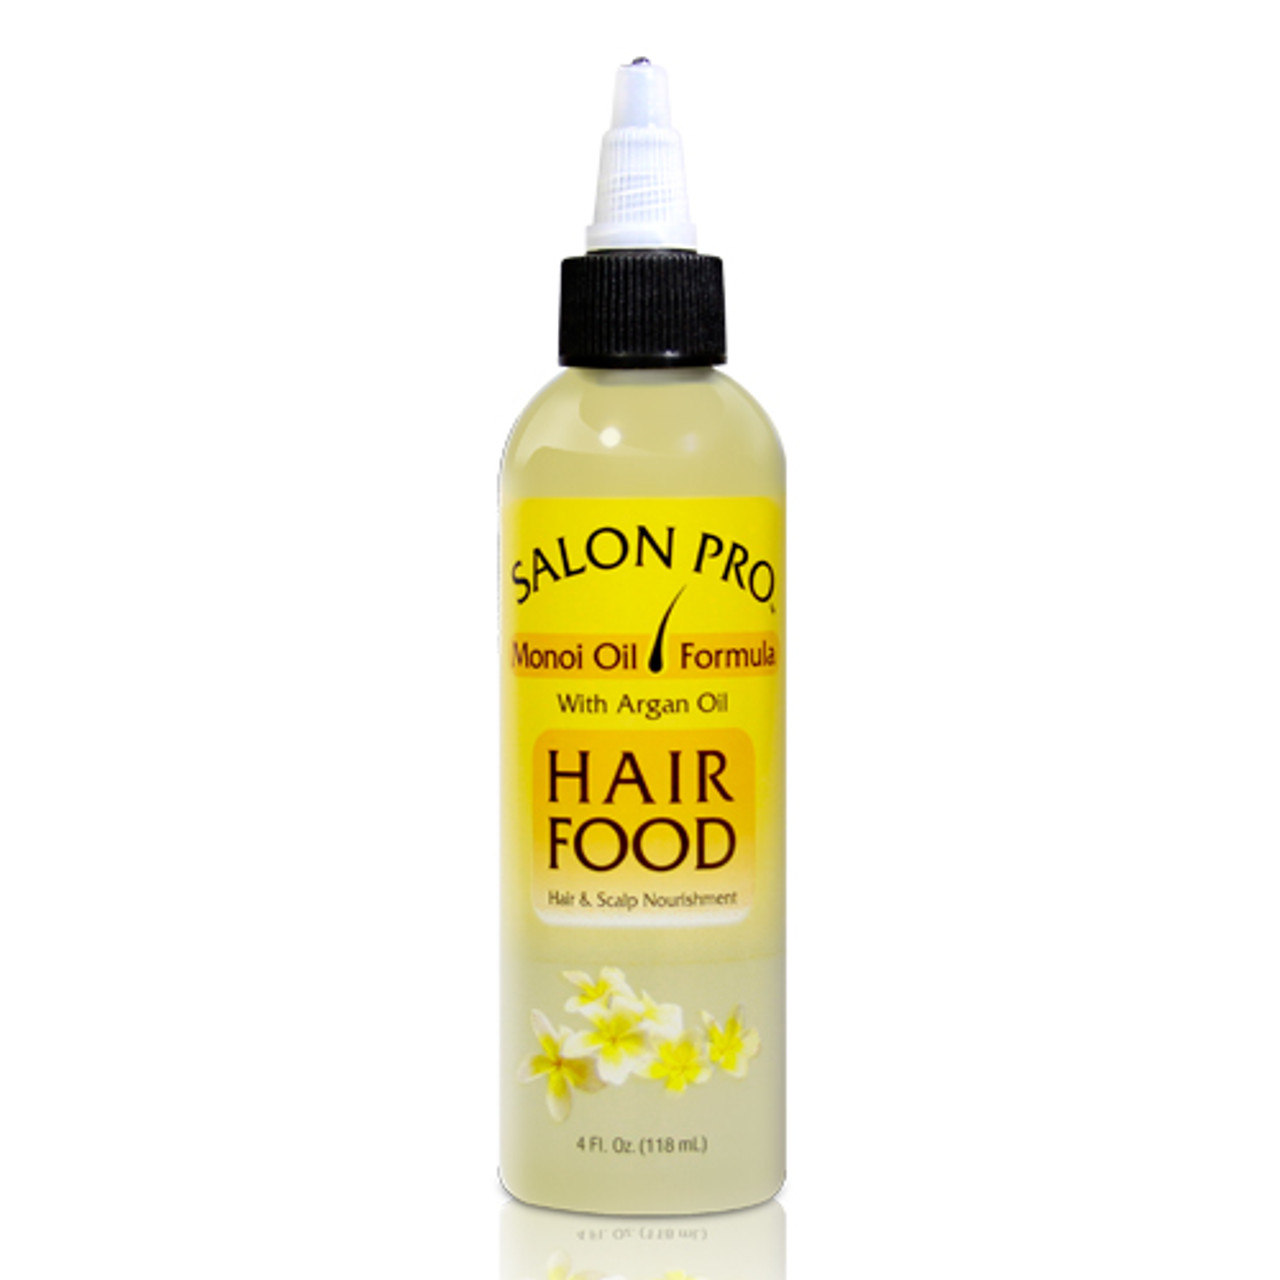 Salon Pro Hair Food Monoi Oil w/ Argan Oil(4 oz) - Top Hair Wigs